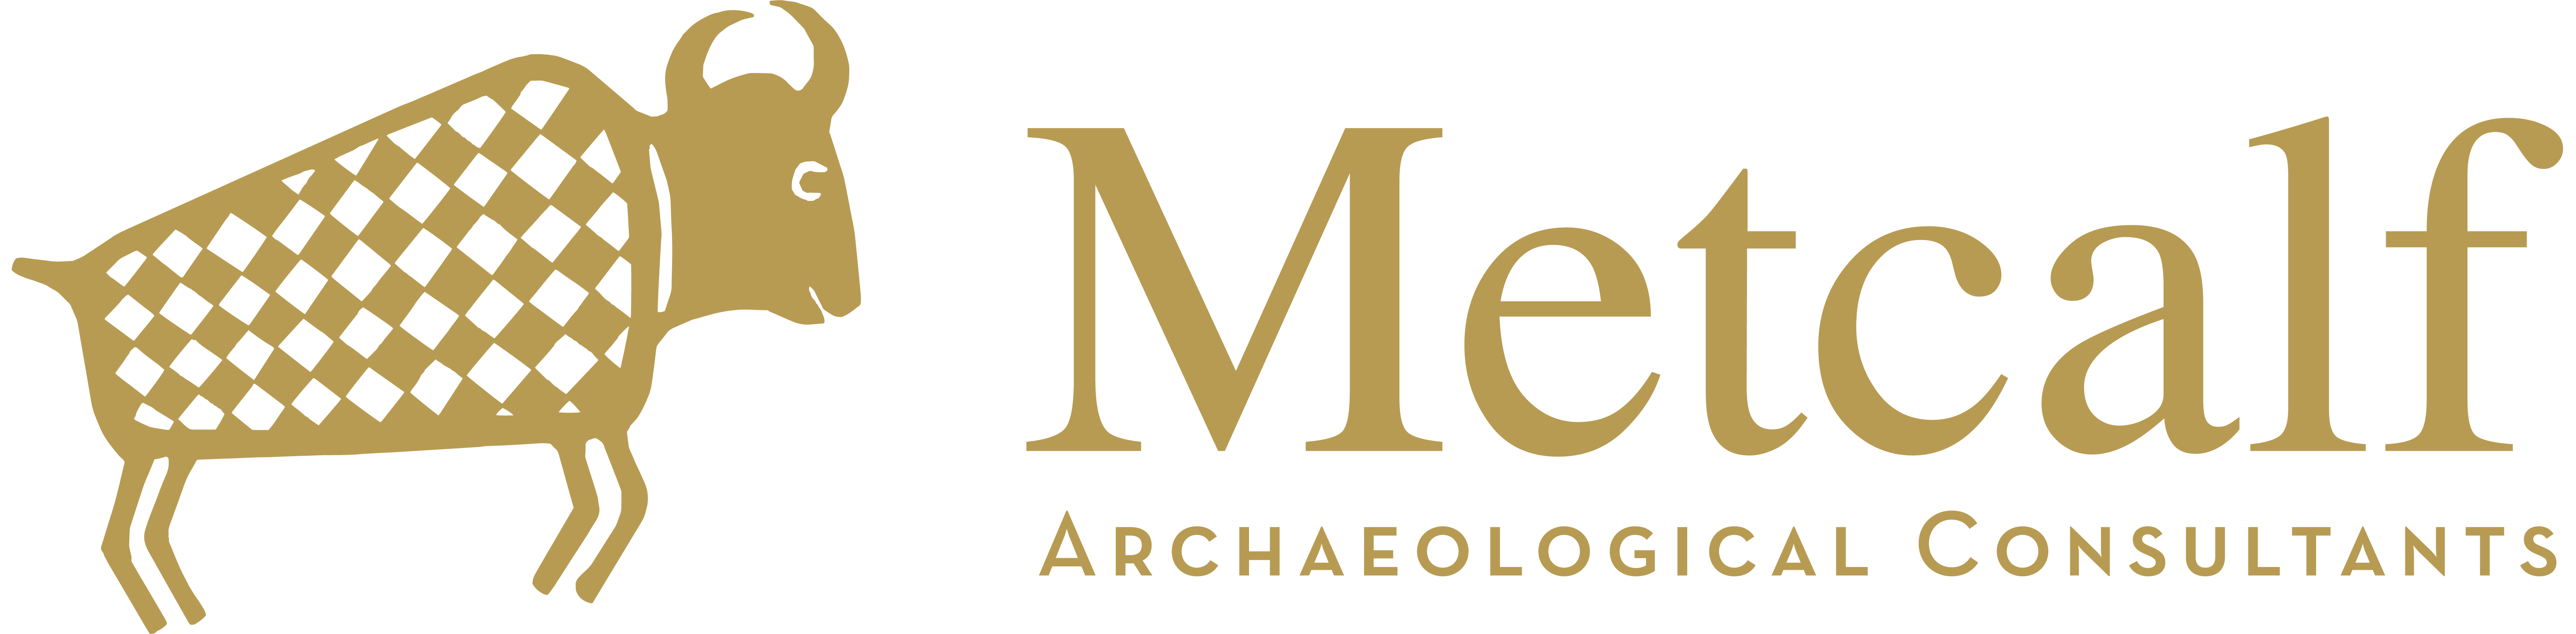 Metcalf Archaeology